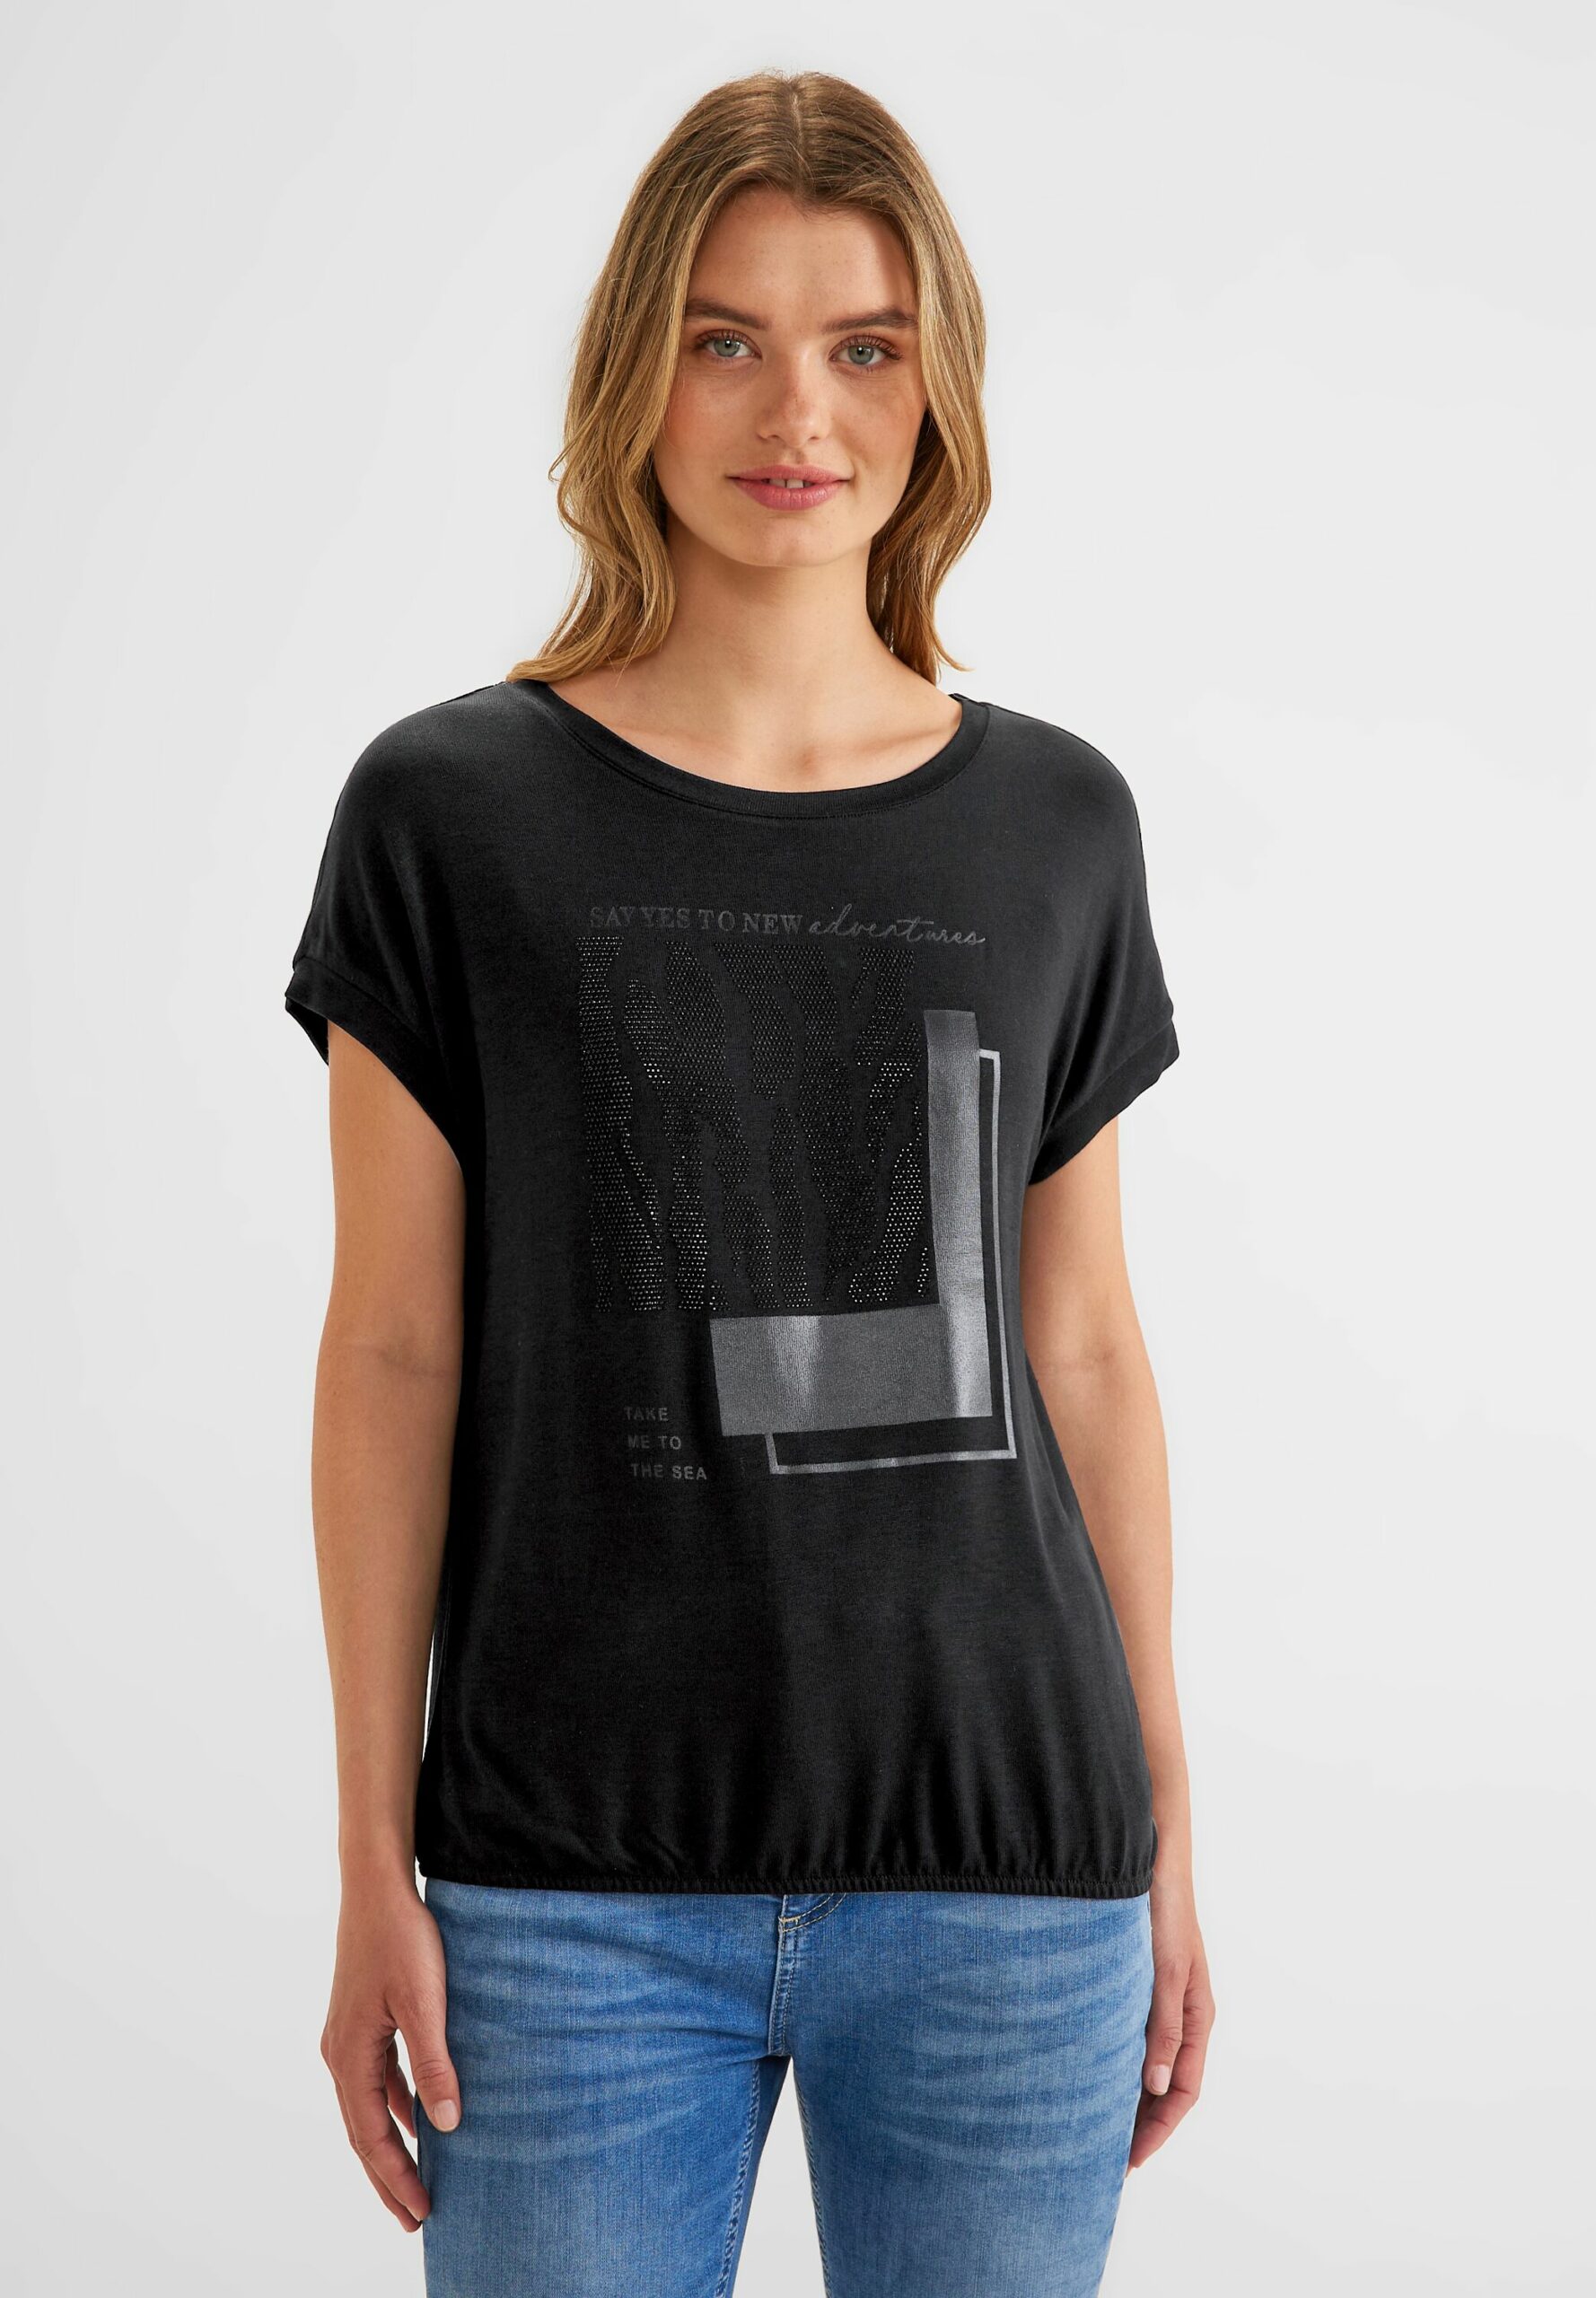 mit Street Horsthemke Partprint One - T-Shirt